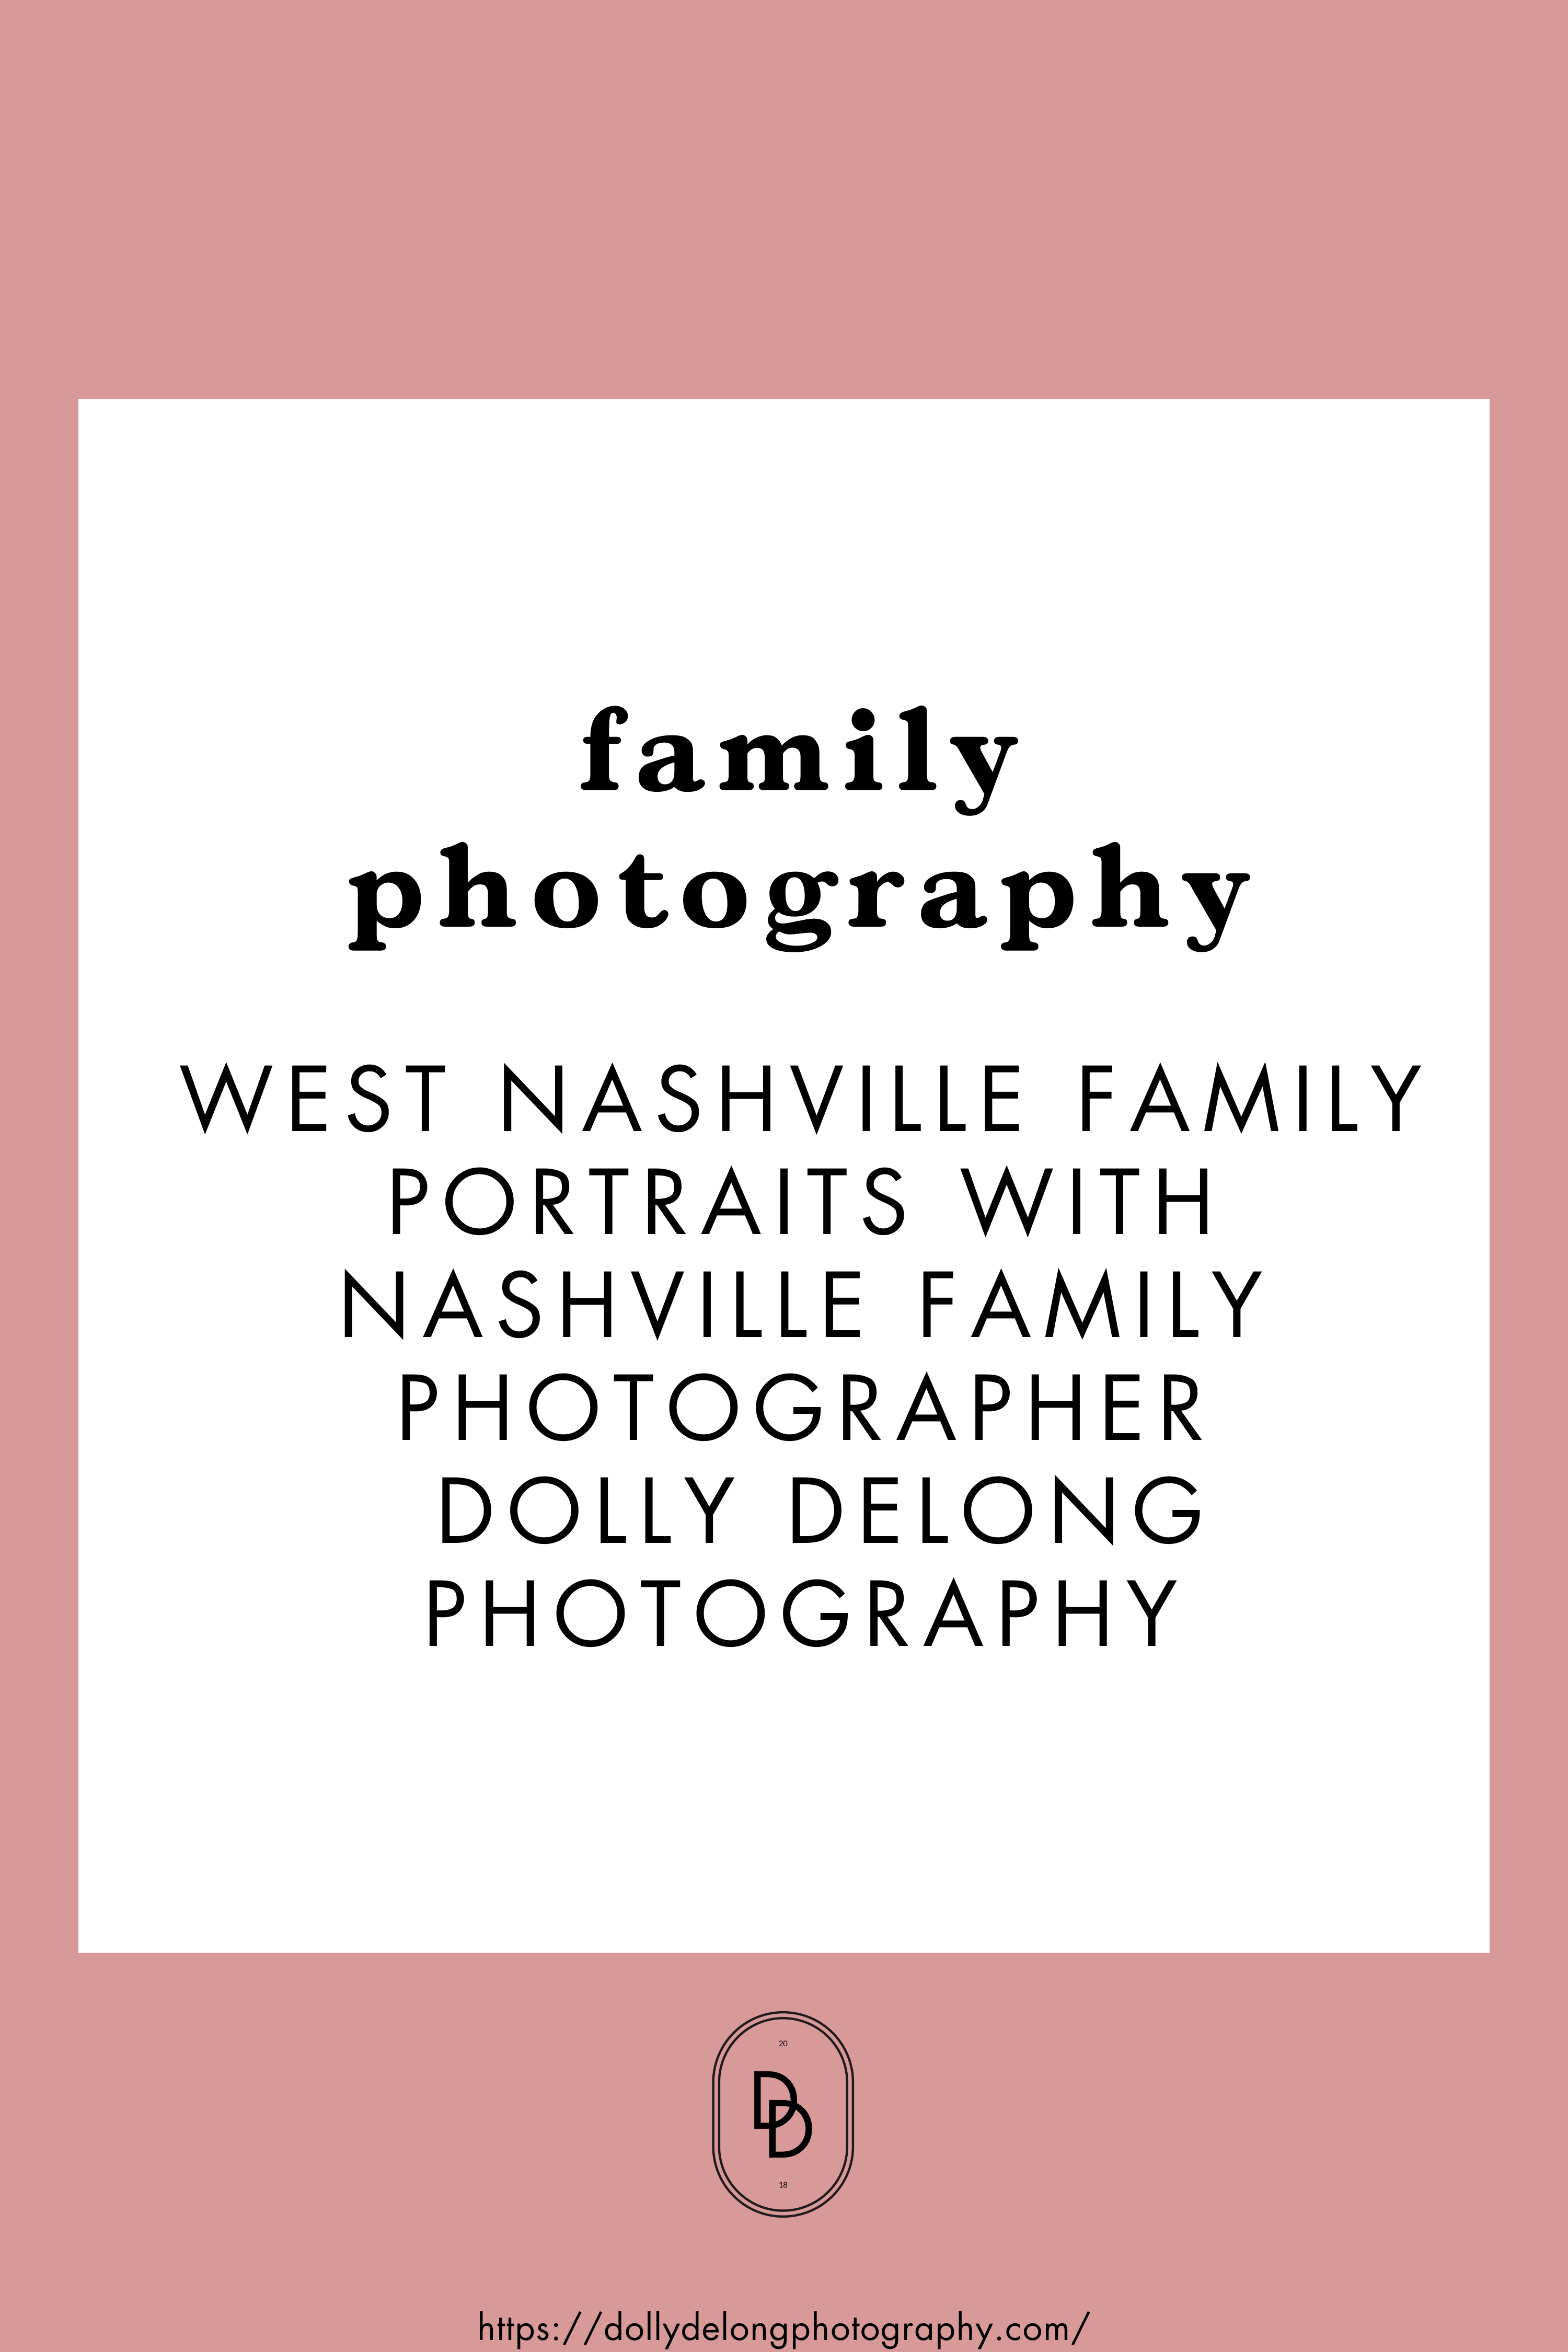 West Nashville Family Portraits with Nashville Family Photographer Dolly DeLong Photography